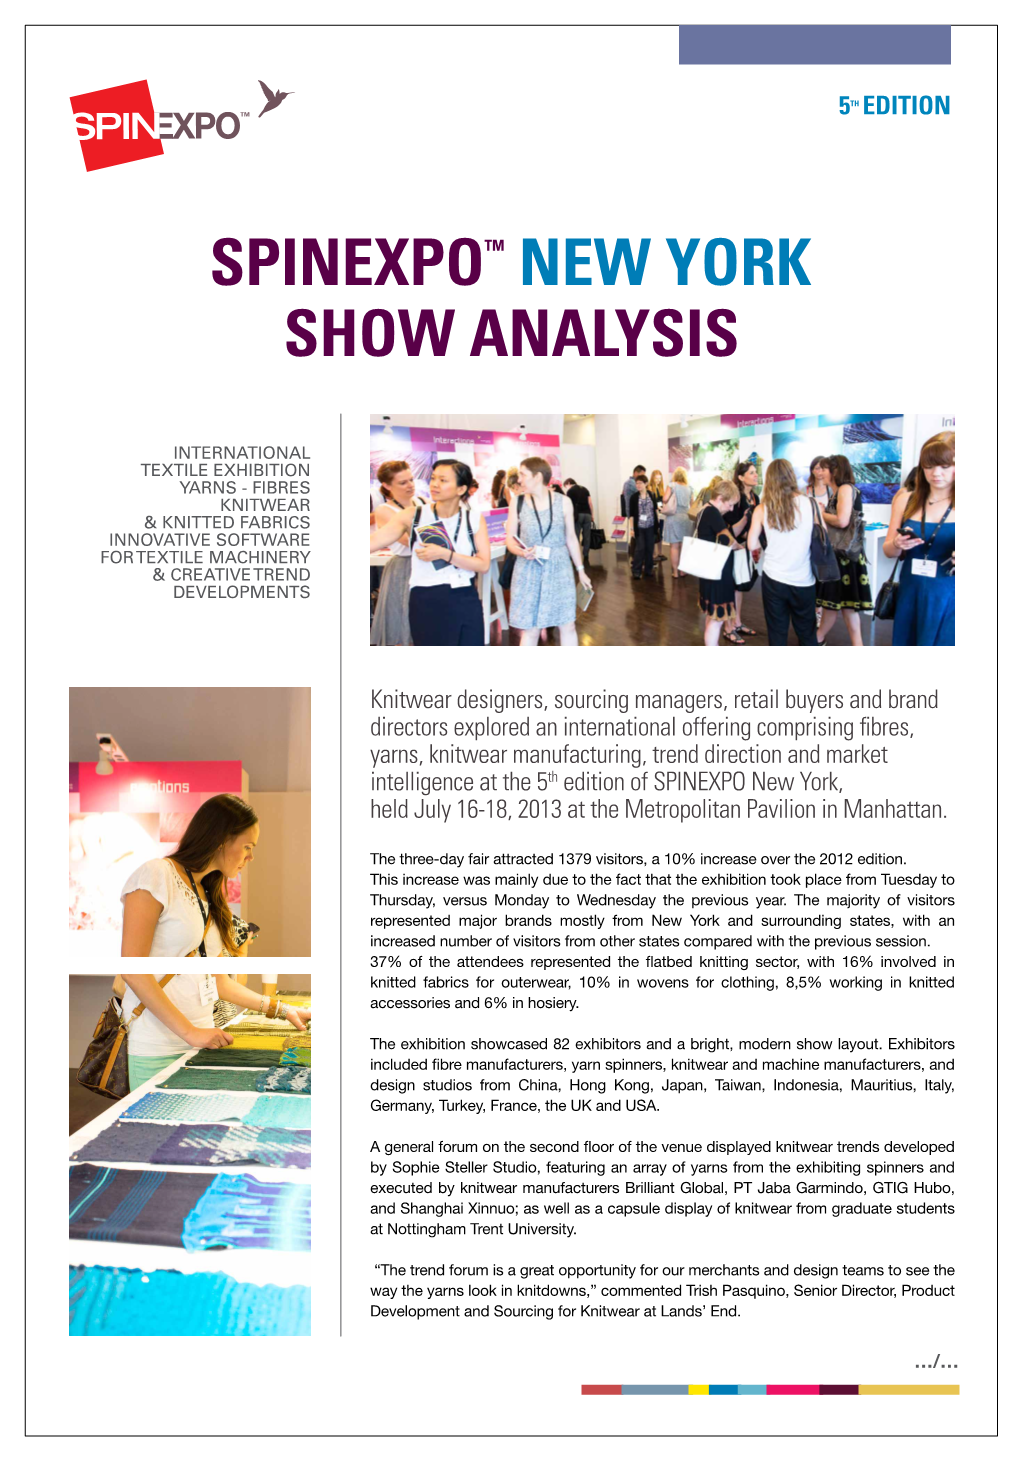 Show Analysis Spinexpotm New York